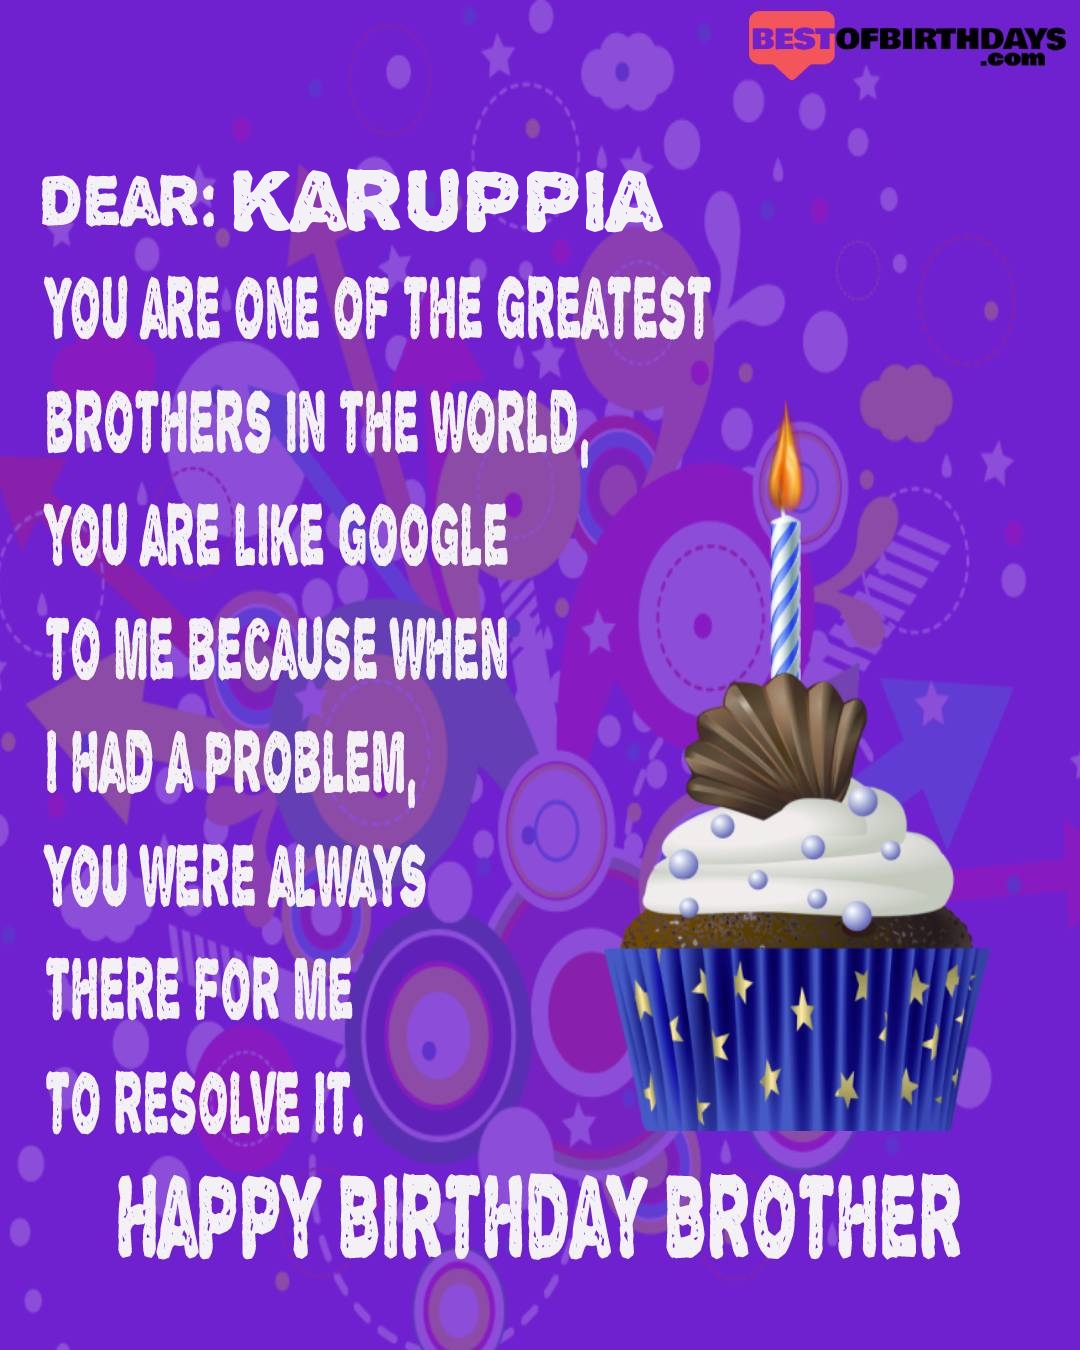 Happy birthday karuppia bhai brother bro